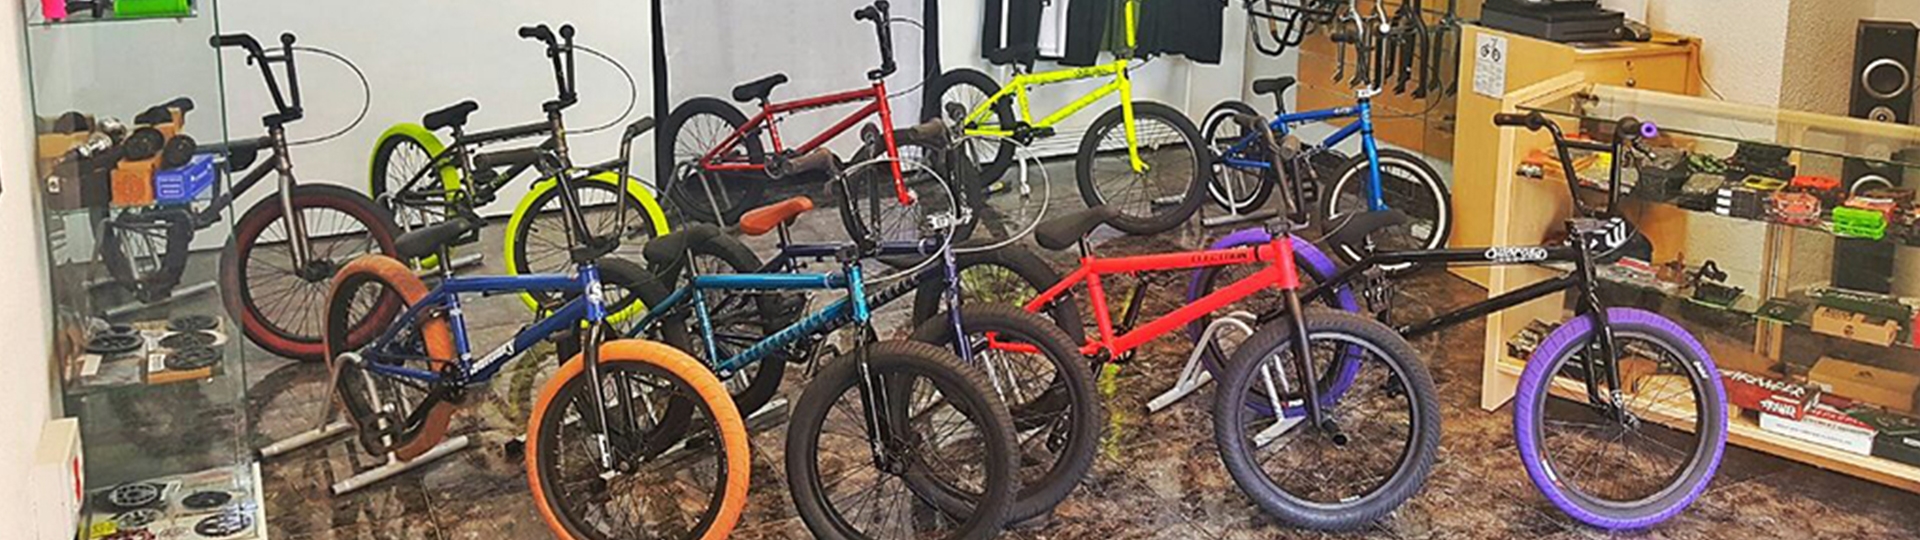 ventilador educación comestible Granja Bmx Bike Shop Tenerife | PortalBici